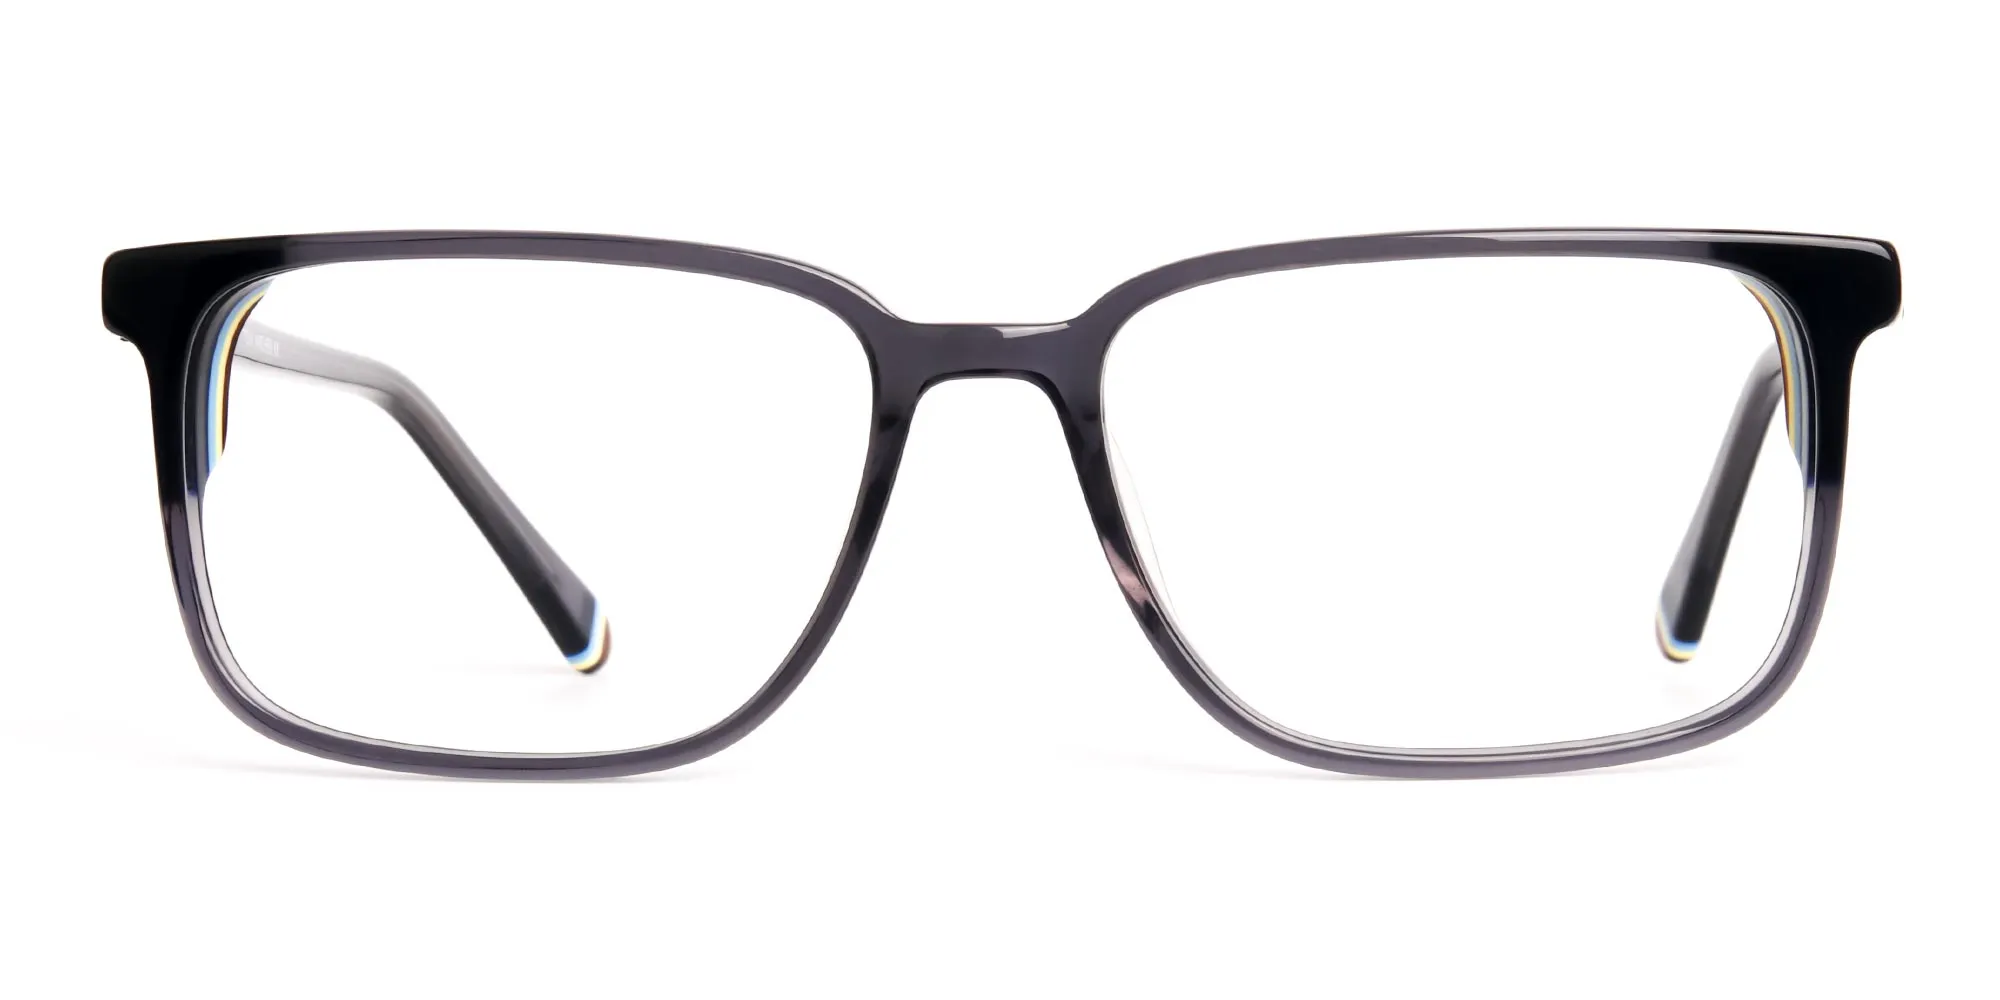 LEIGH 5 - Dark Grey Shiny Rectangular Glasses | Specscart.®